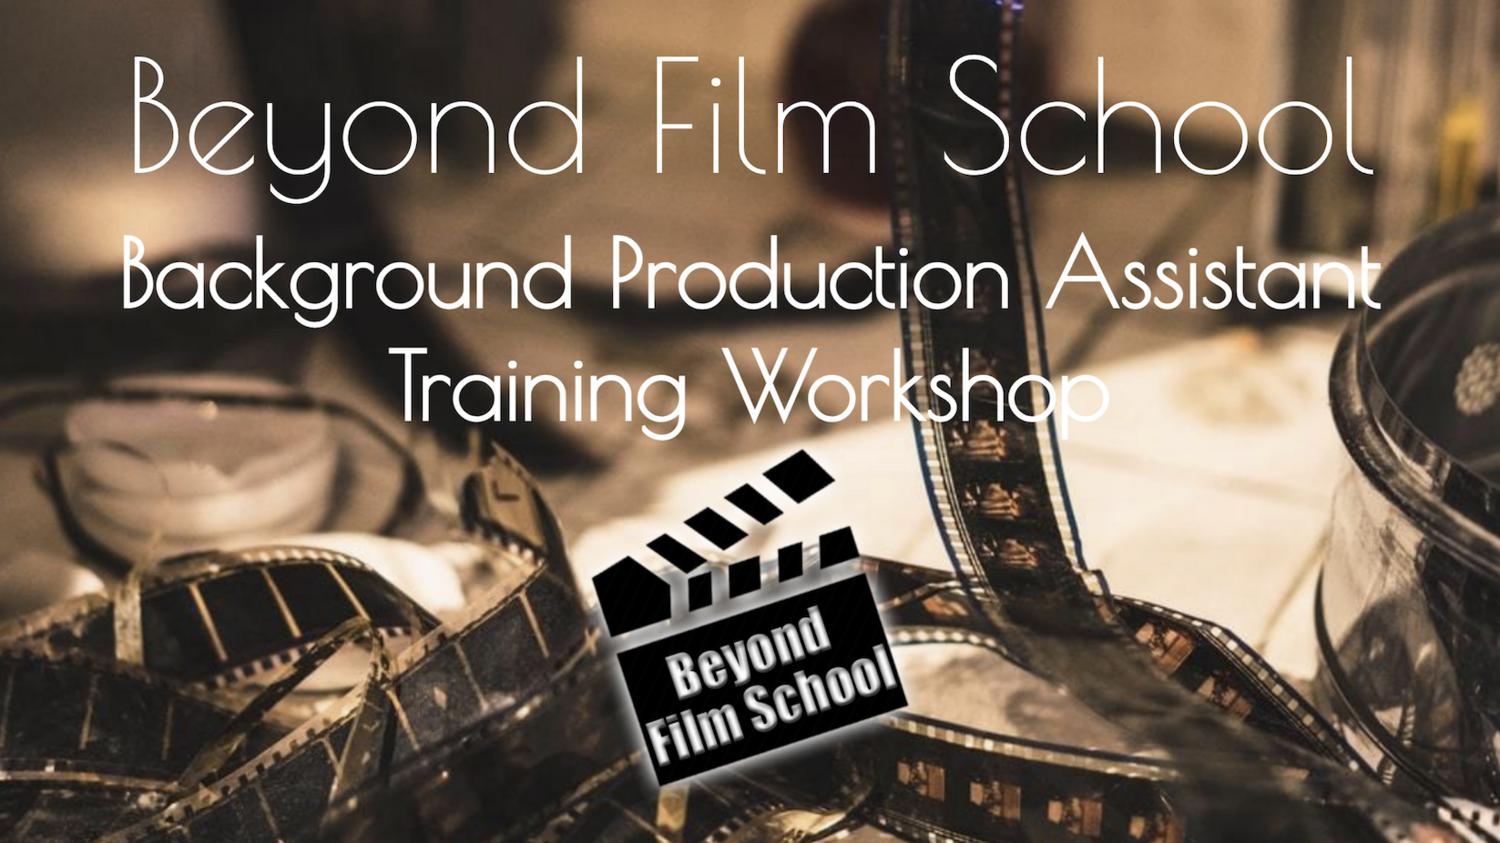 Background Production Assistant Training Workshop